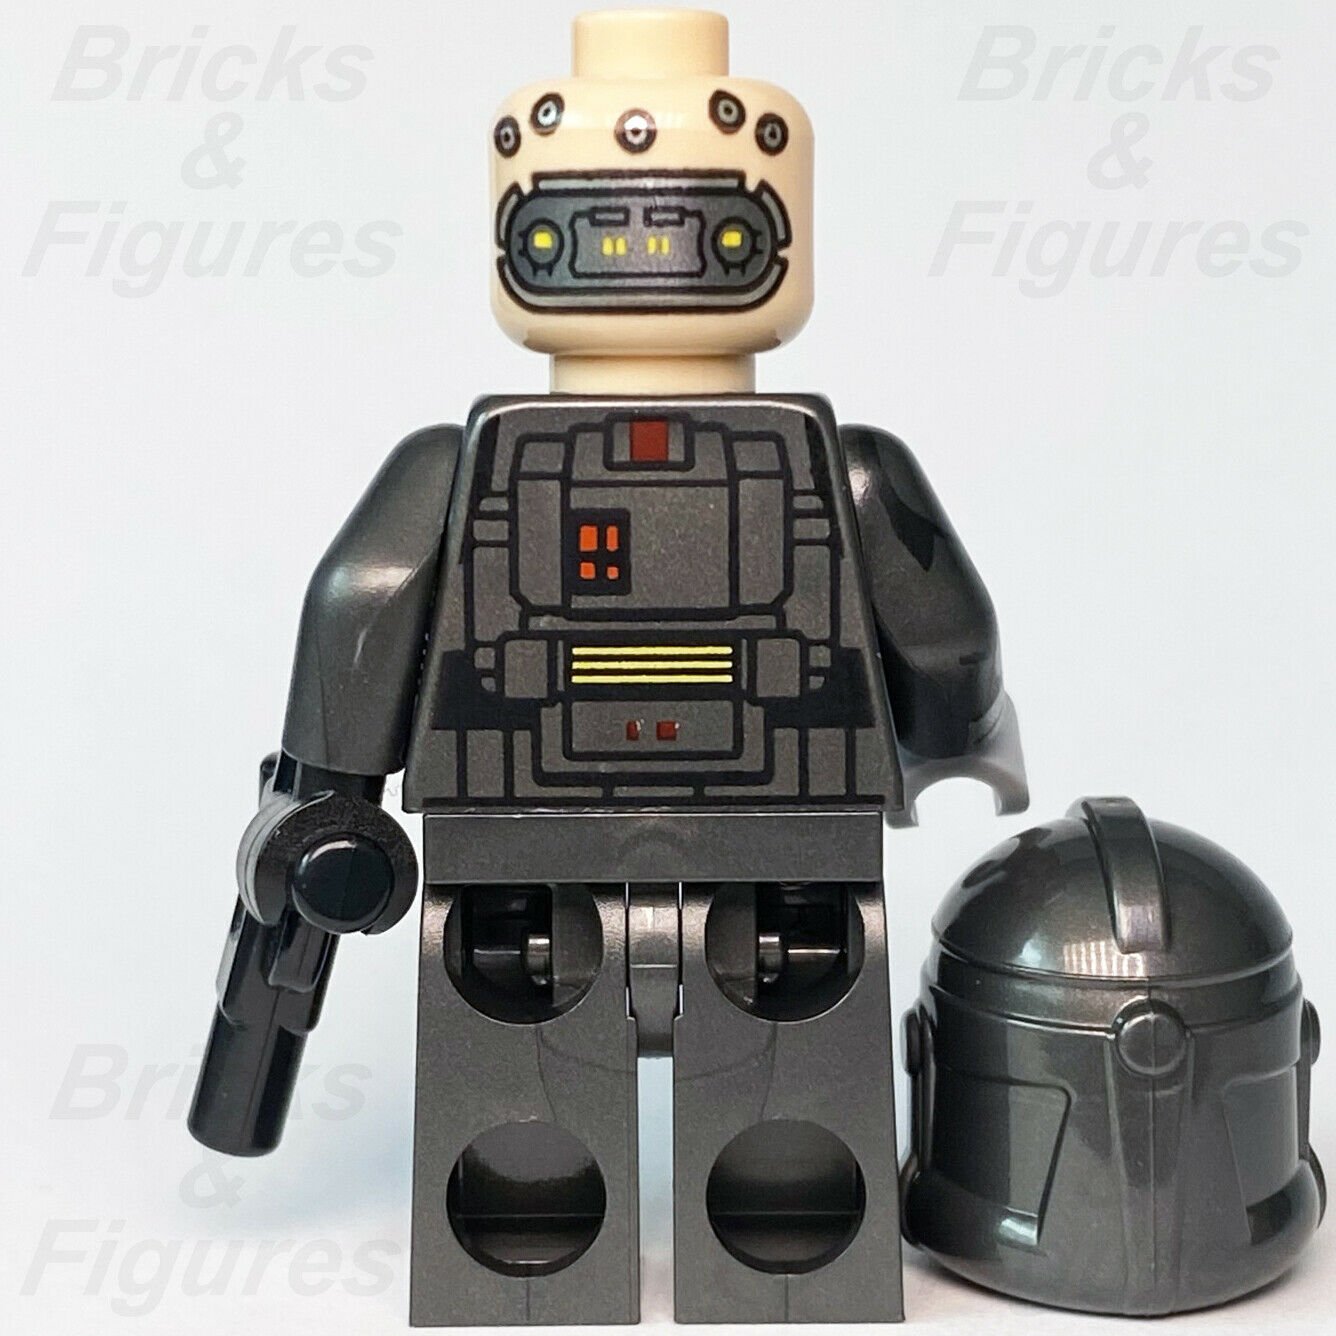 New Star Wars LEGO Echo The Bad Batch Clone Trooper Minifigure 75314 sw1151 - Bricks & Figures